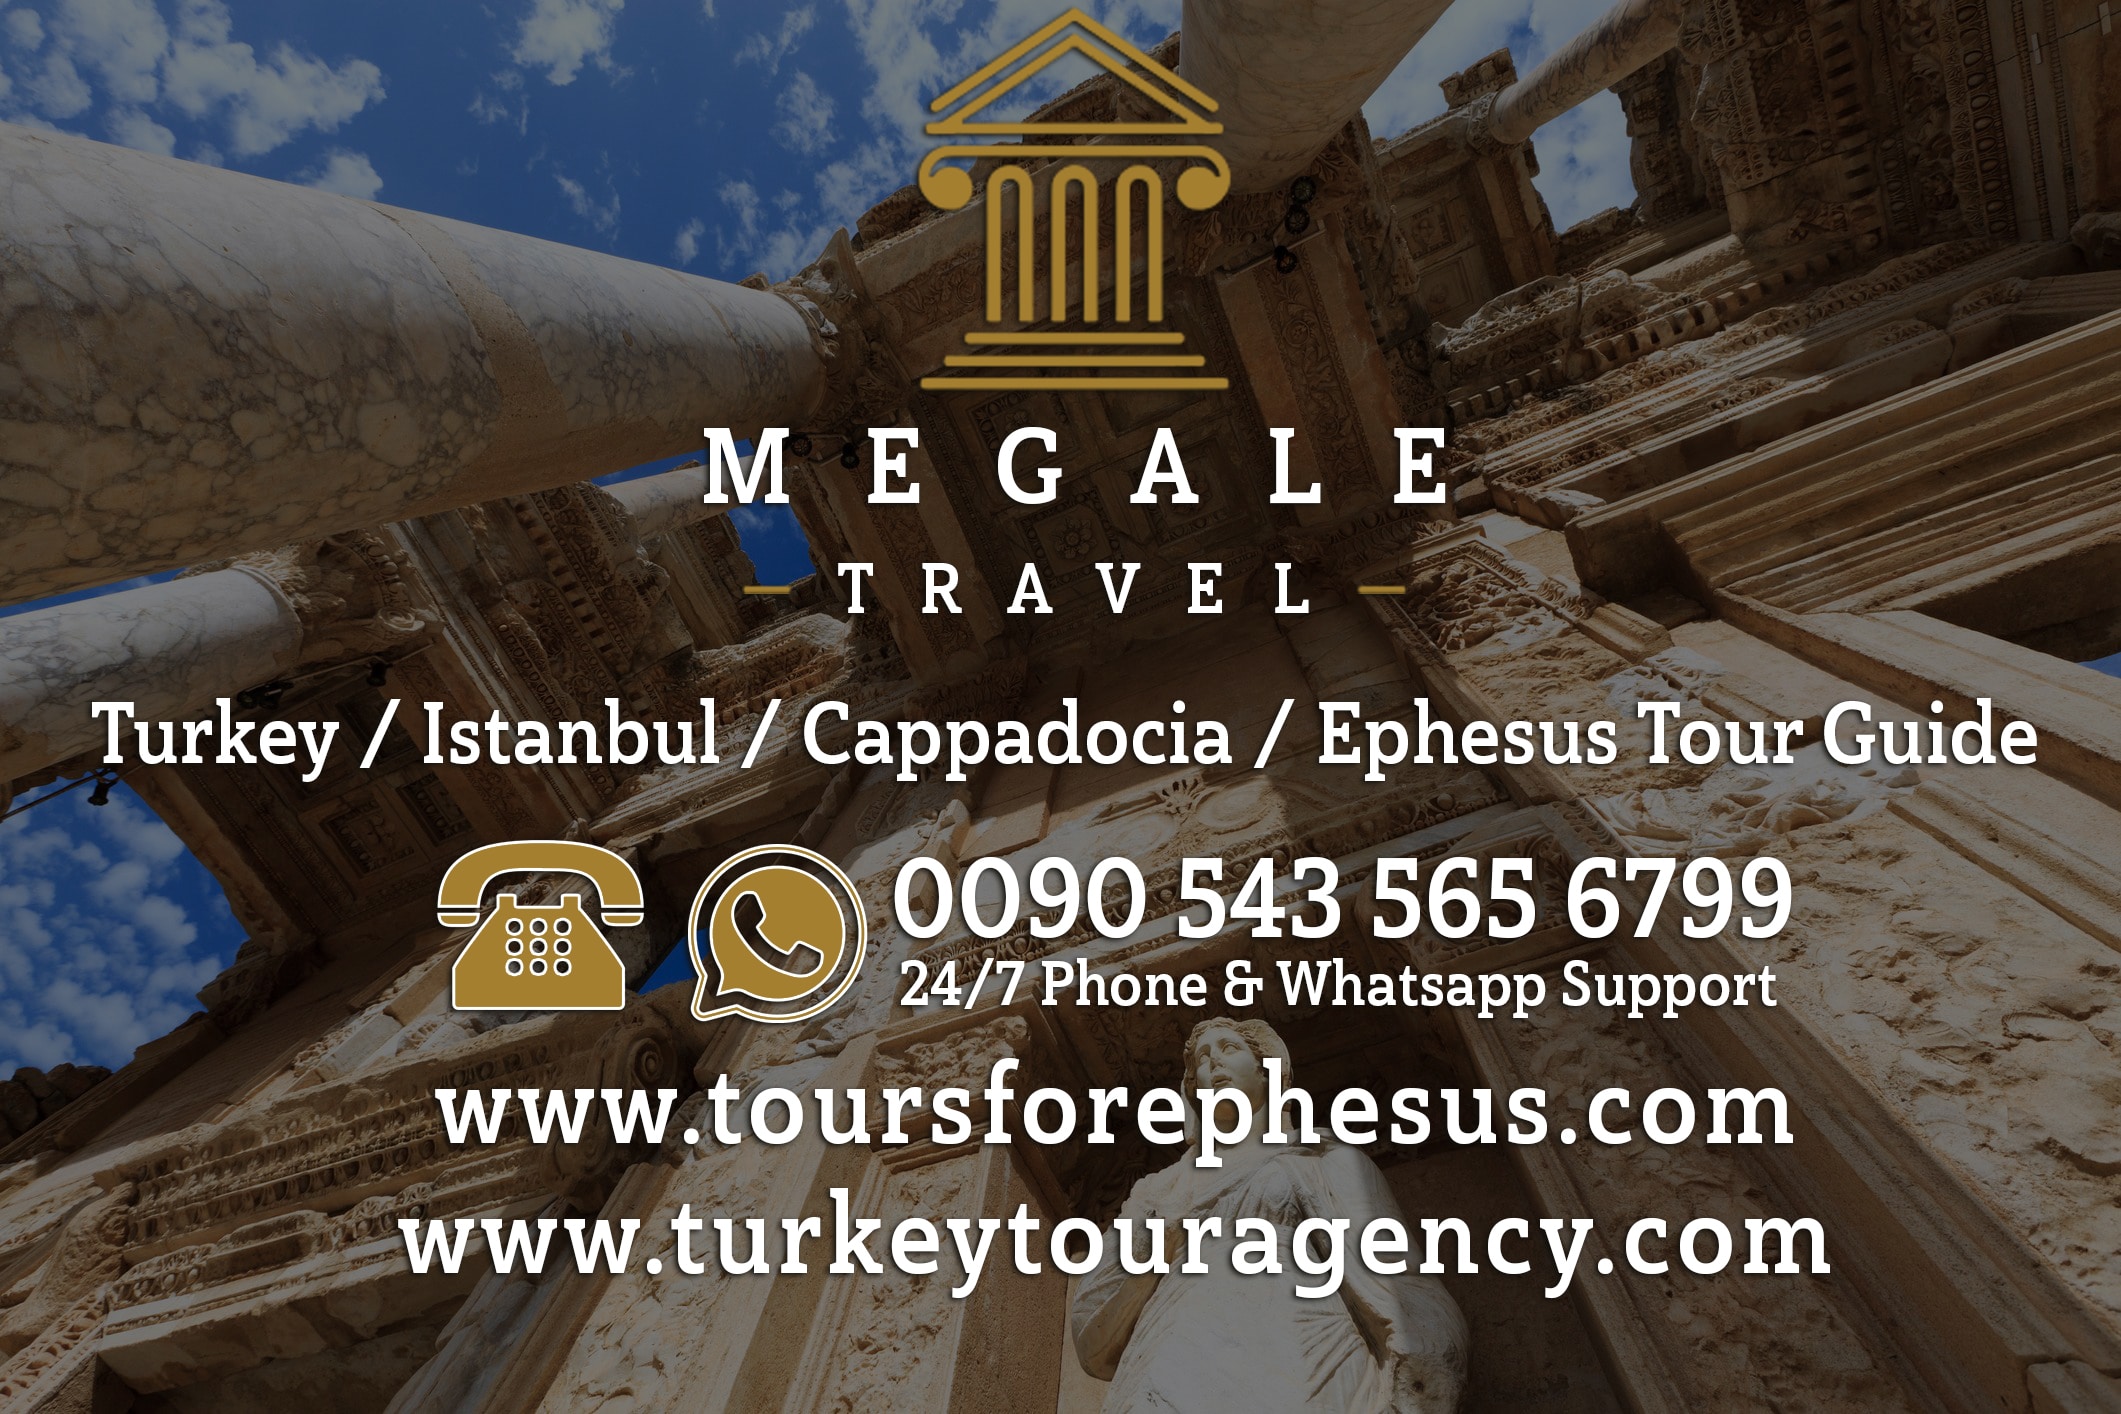 Tours For Ephesus Trip Advisor